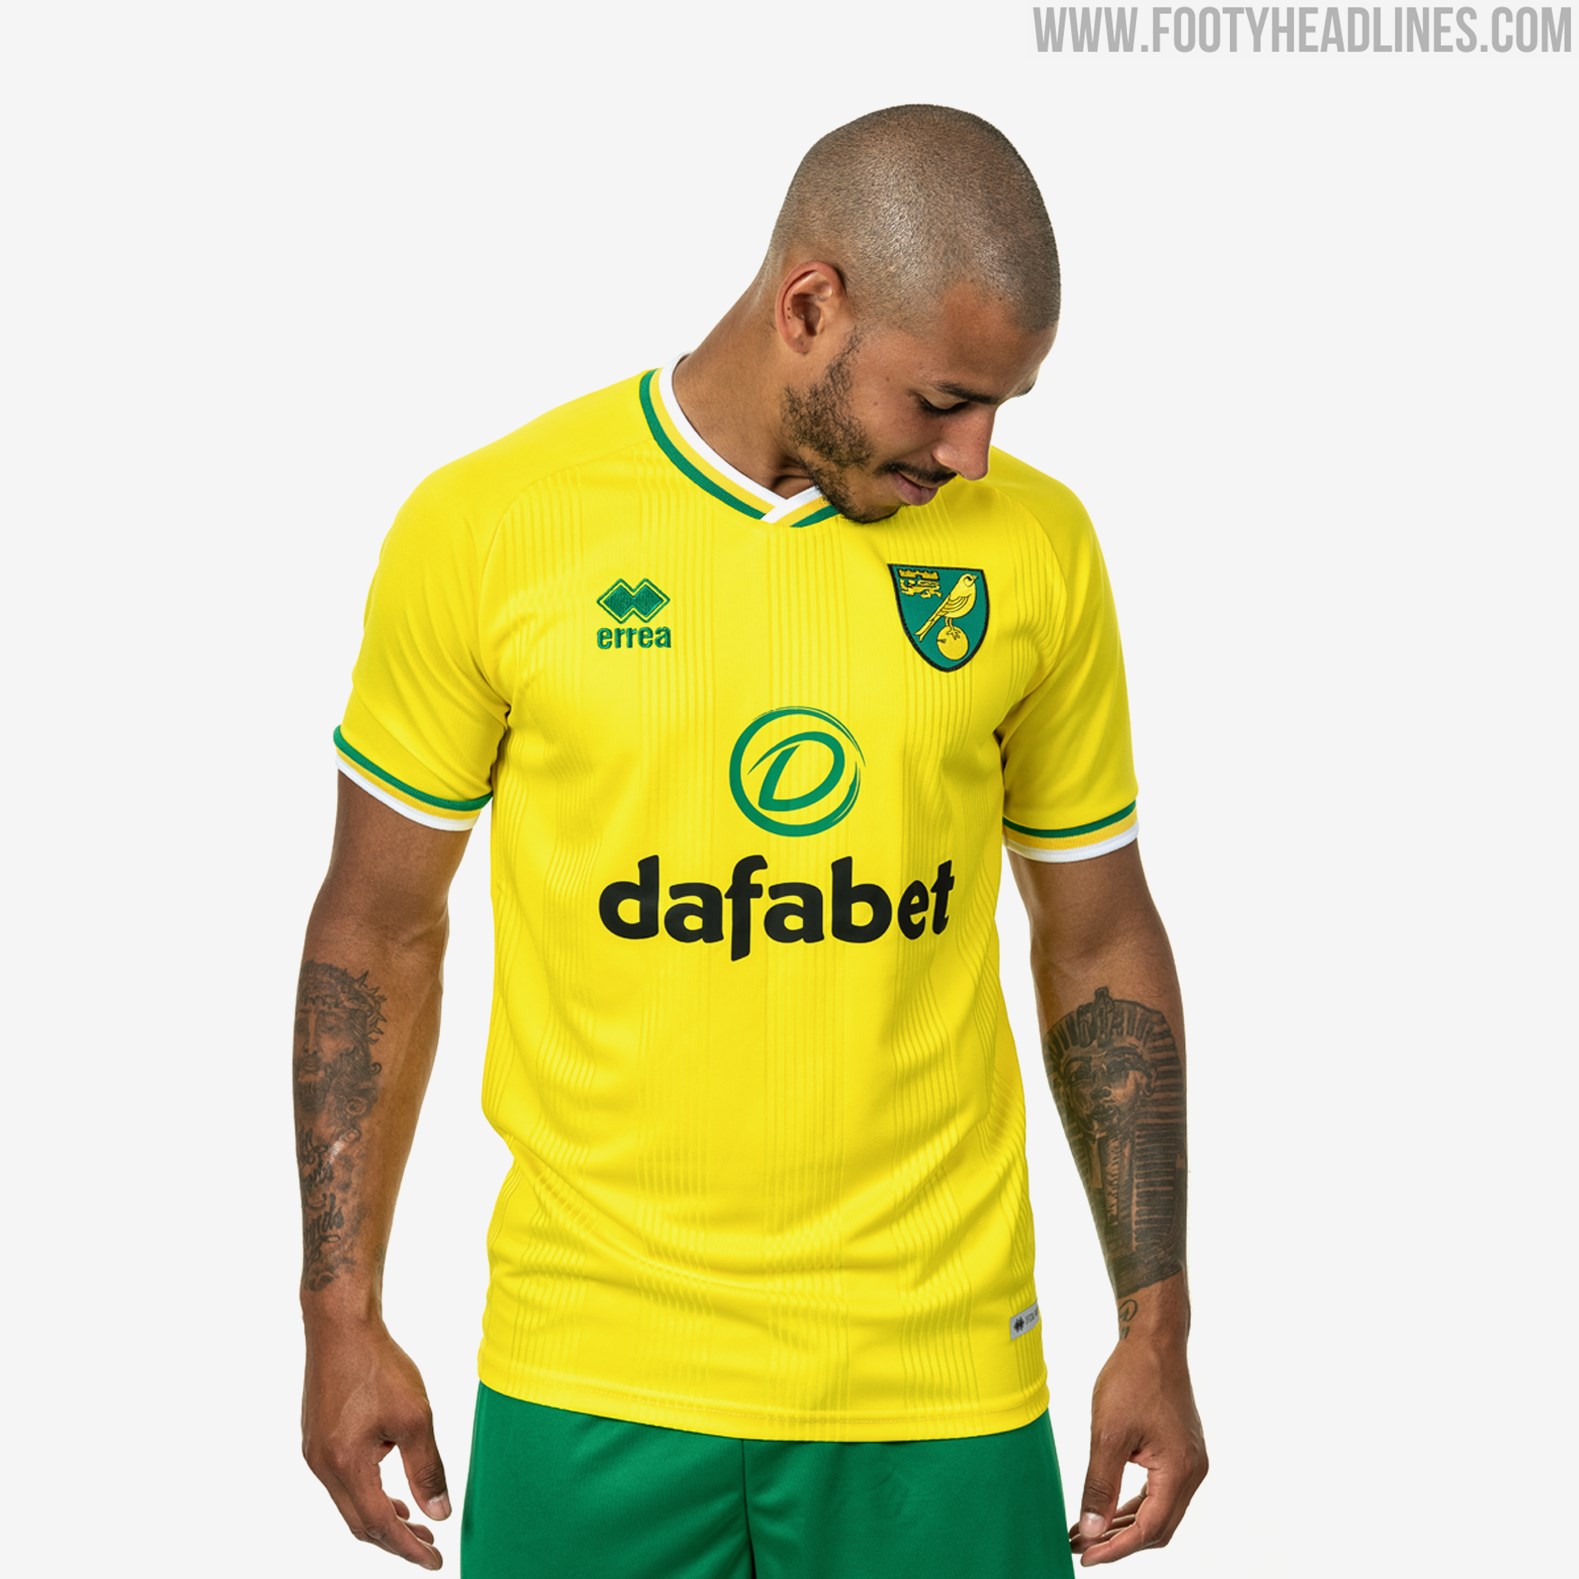 Norwich City 20-21 Home Kit Released - Footy Headlines